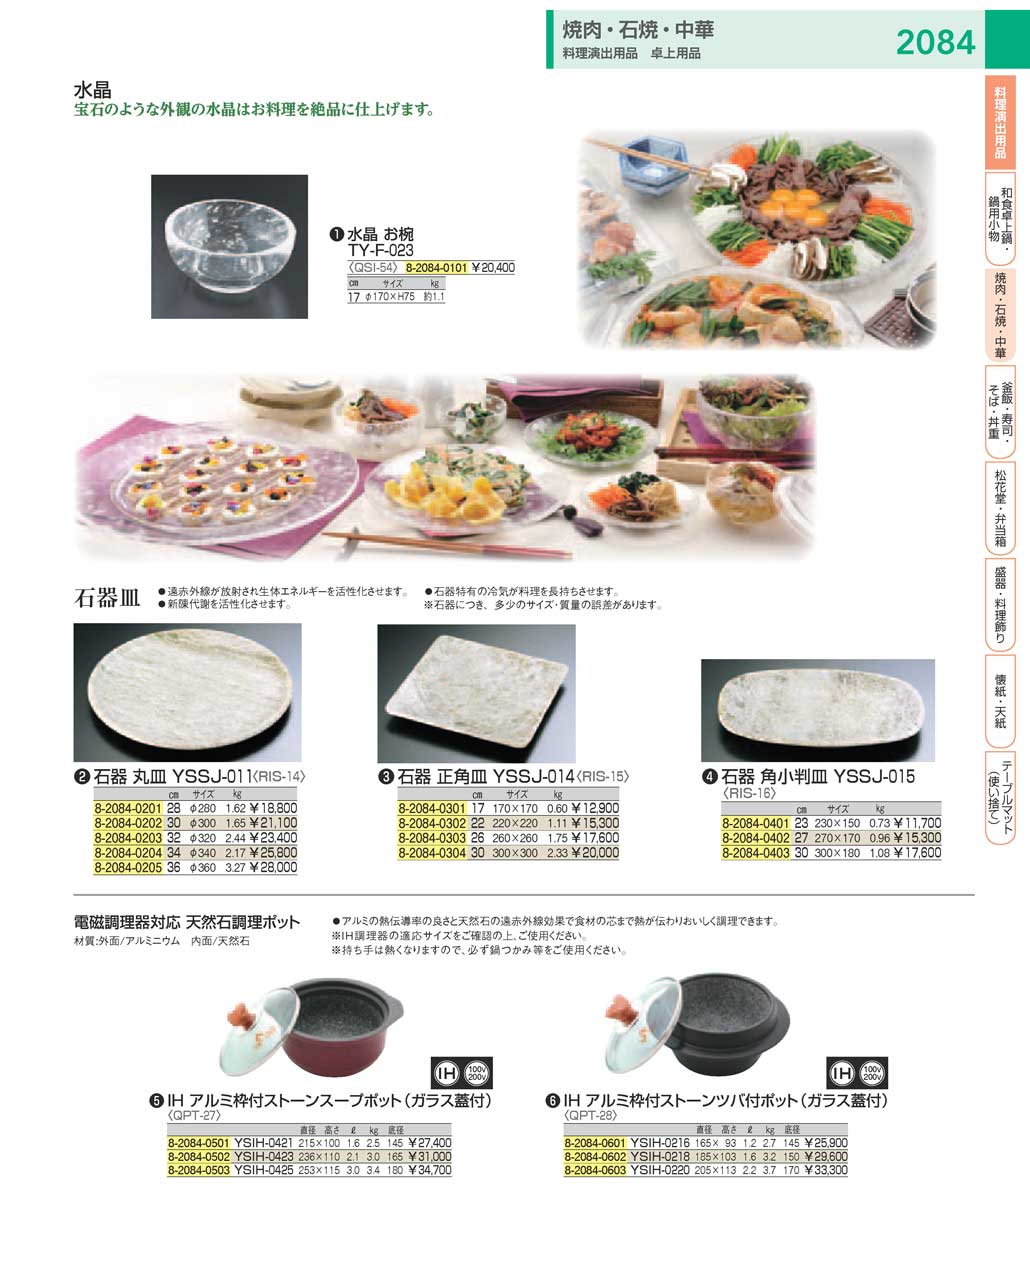 IH 最も安い購入枠付ストーン スープポット YSIH-0423【厨房用品 調理